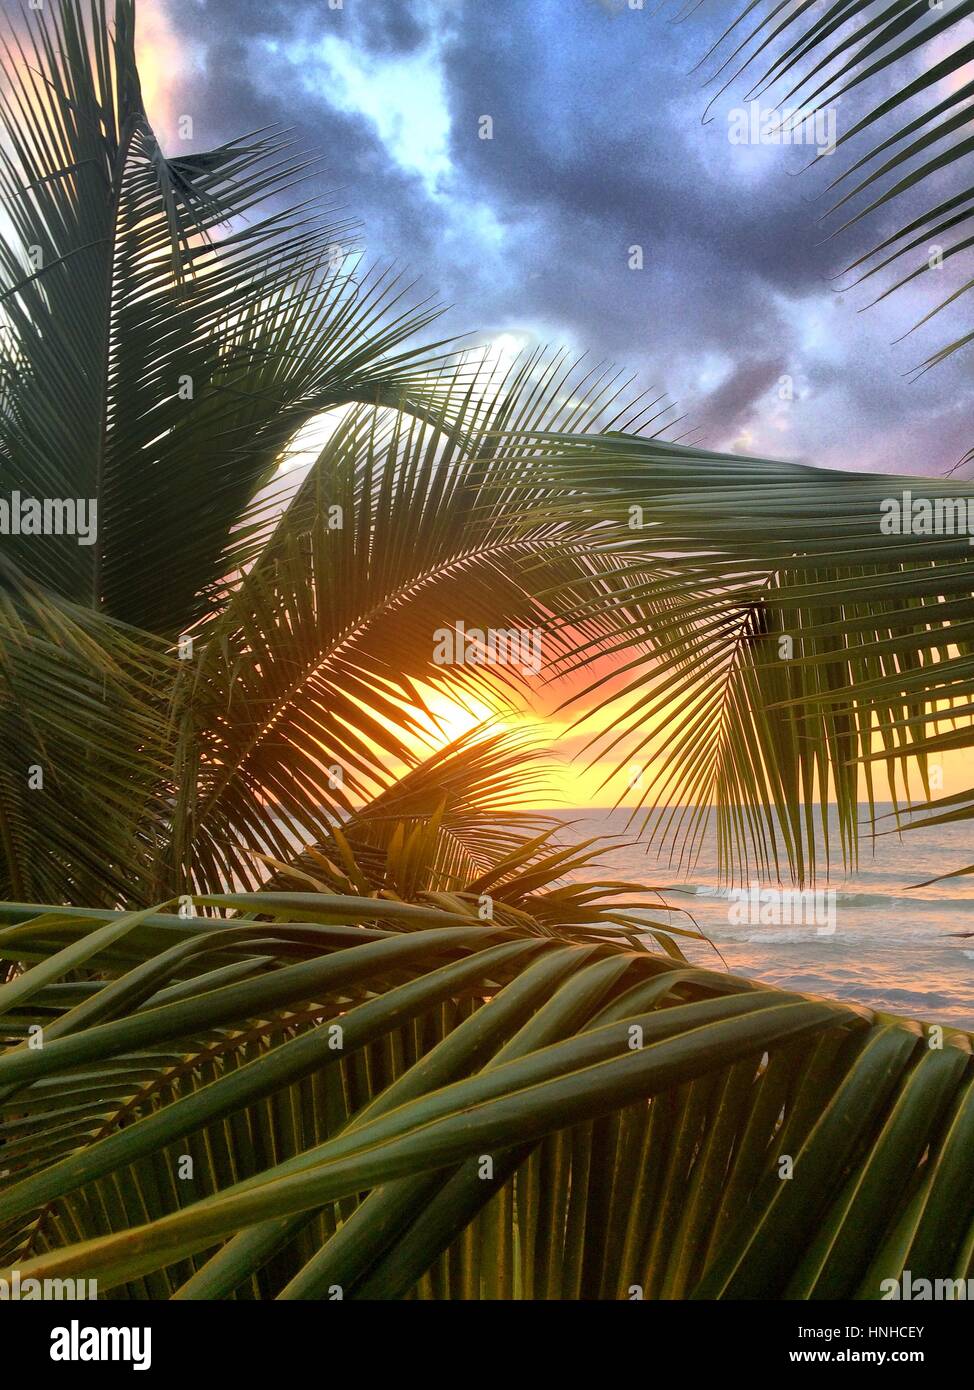 Sunset over Seven mile beach, Jamaica. Seen through a palm tree. Stock Photo